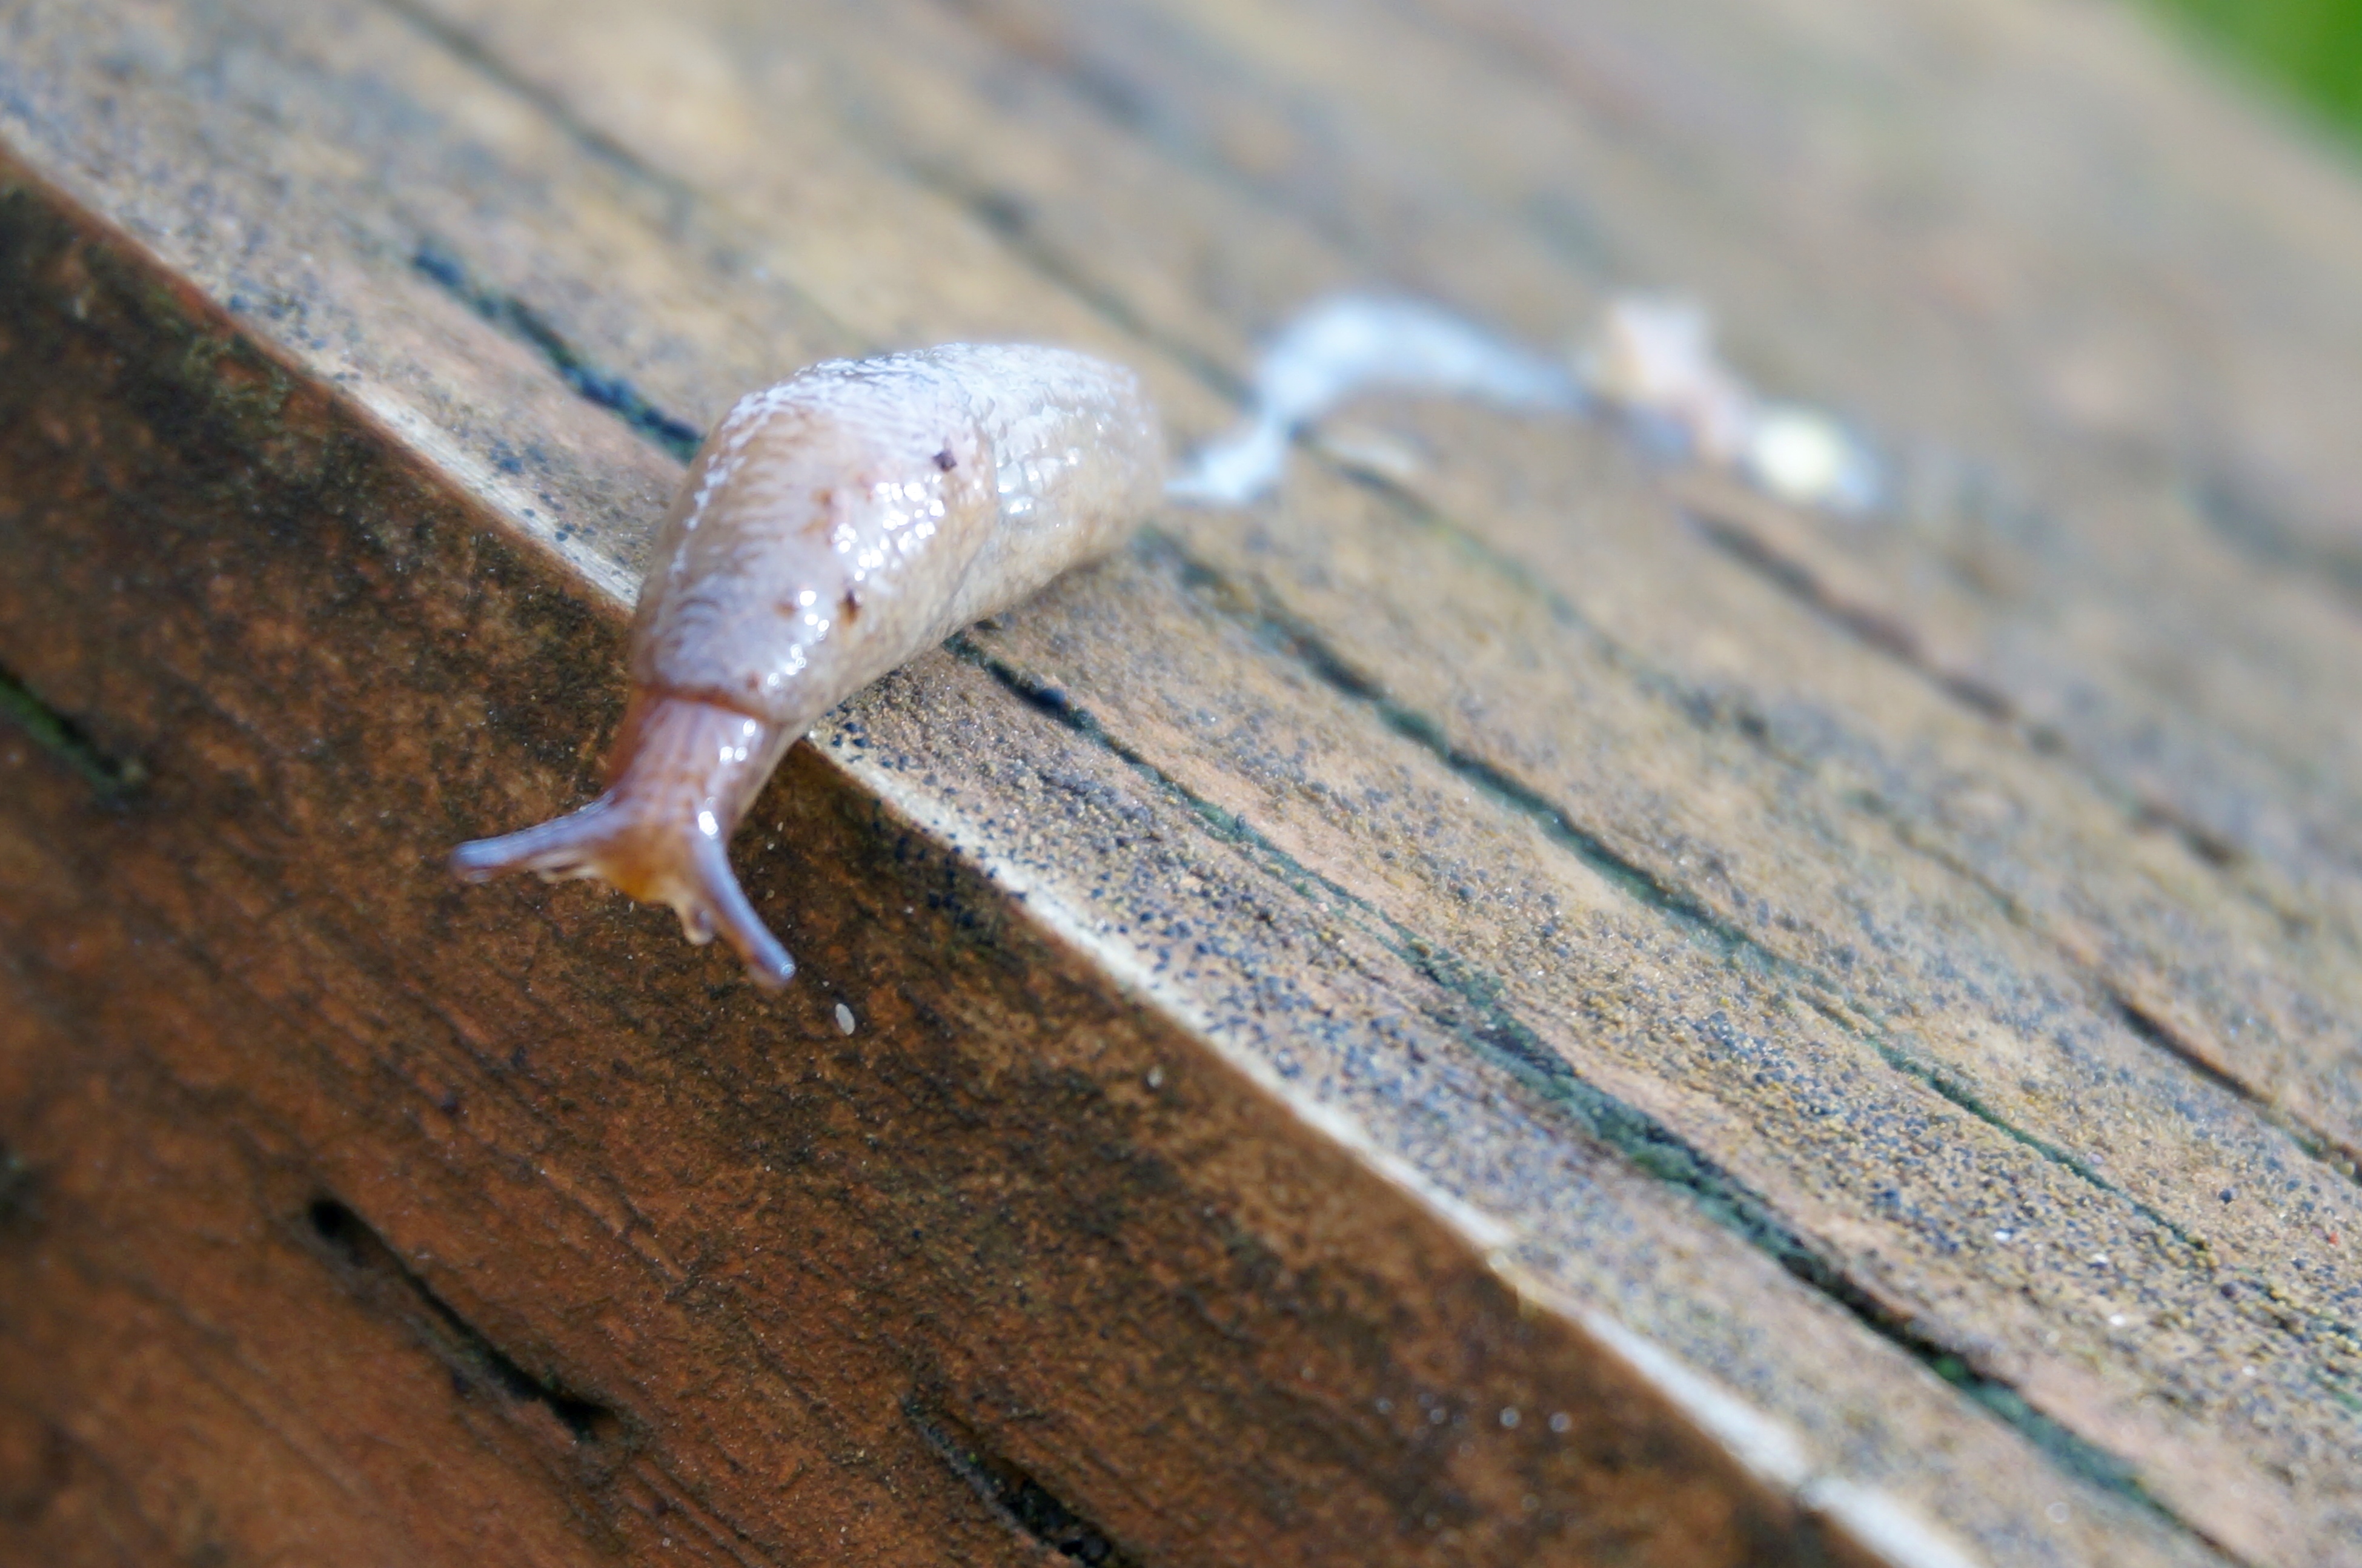 The Only Good Slug Is a Dead Slug – A Bright Ray of Hope